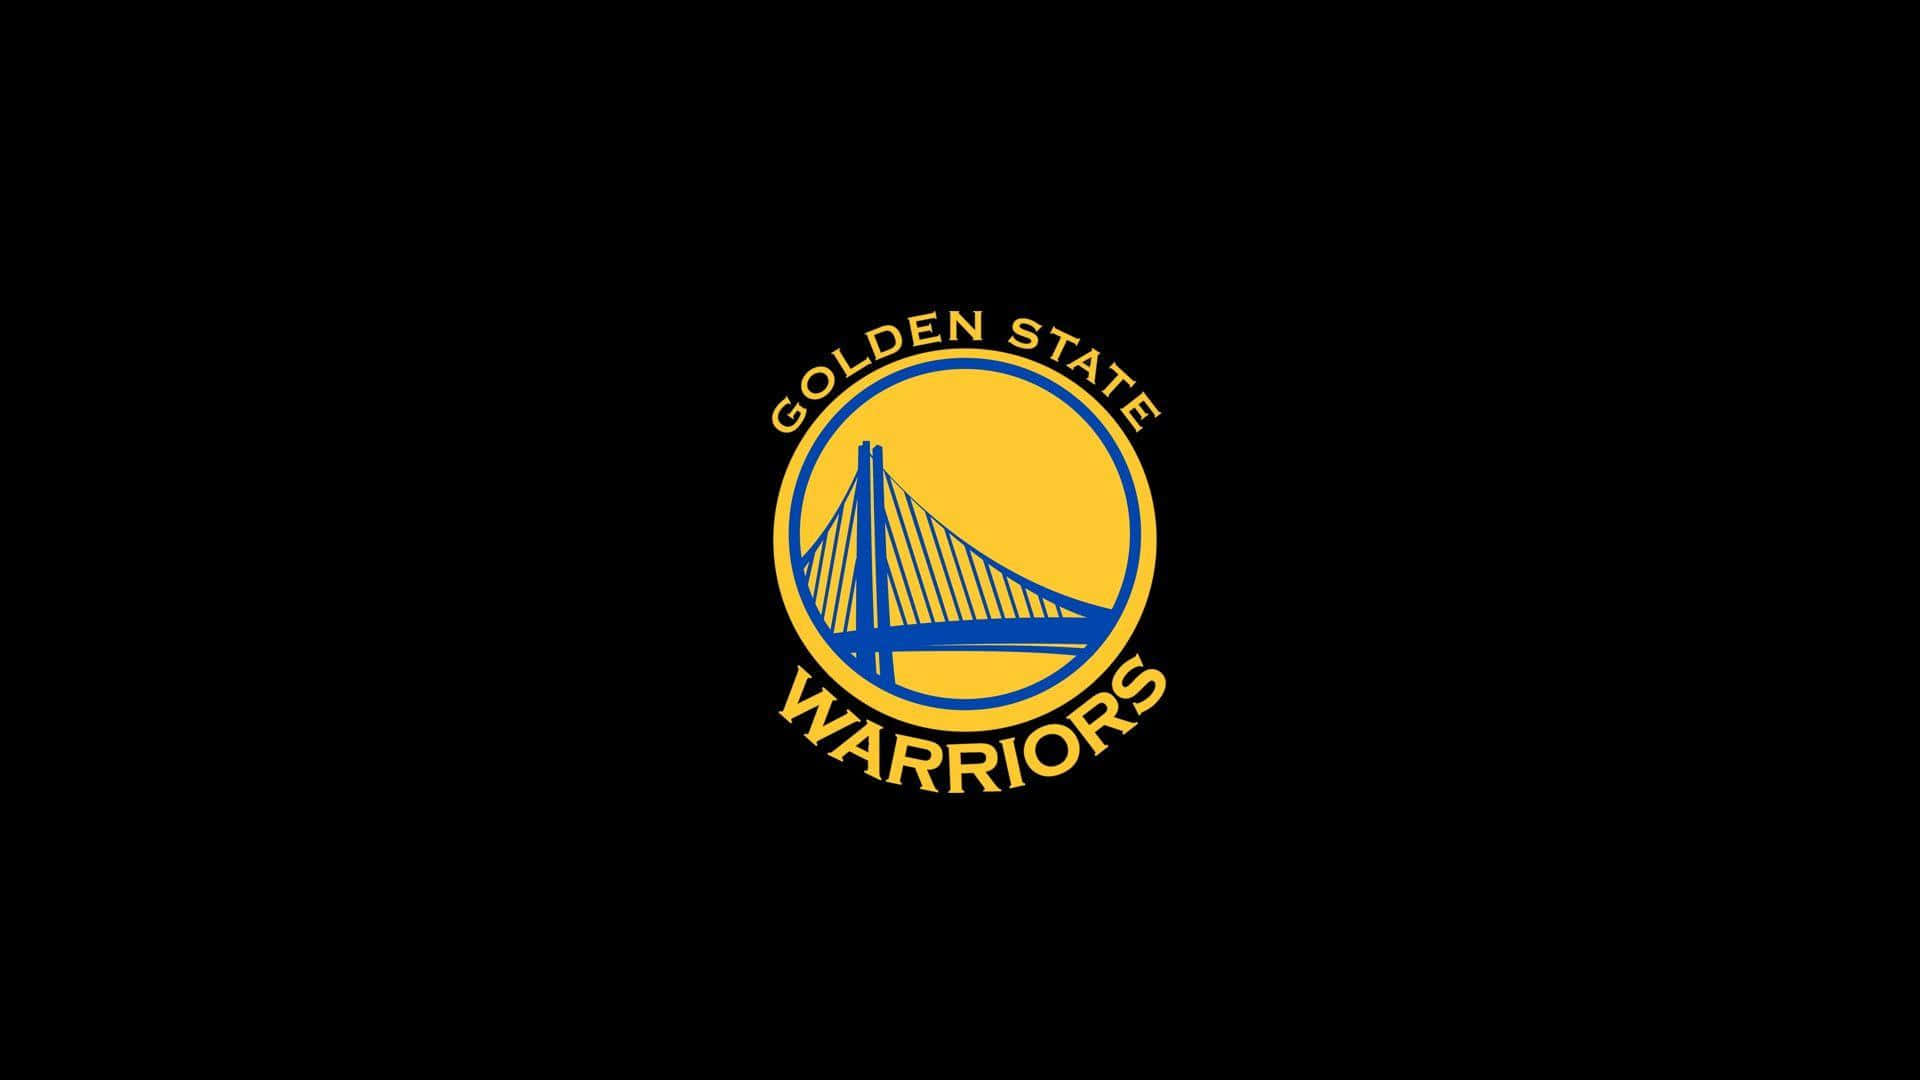 Golden State Warriors Logo Black Background Wallpaper